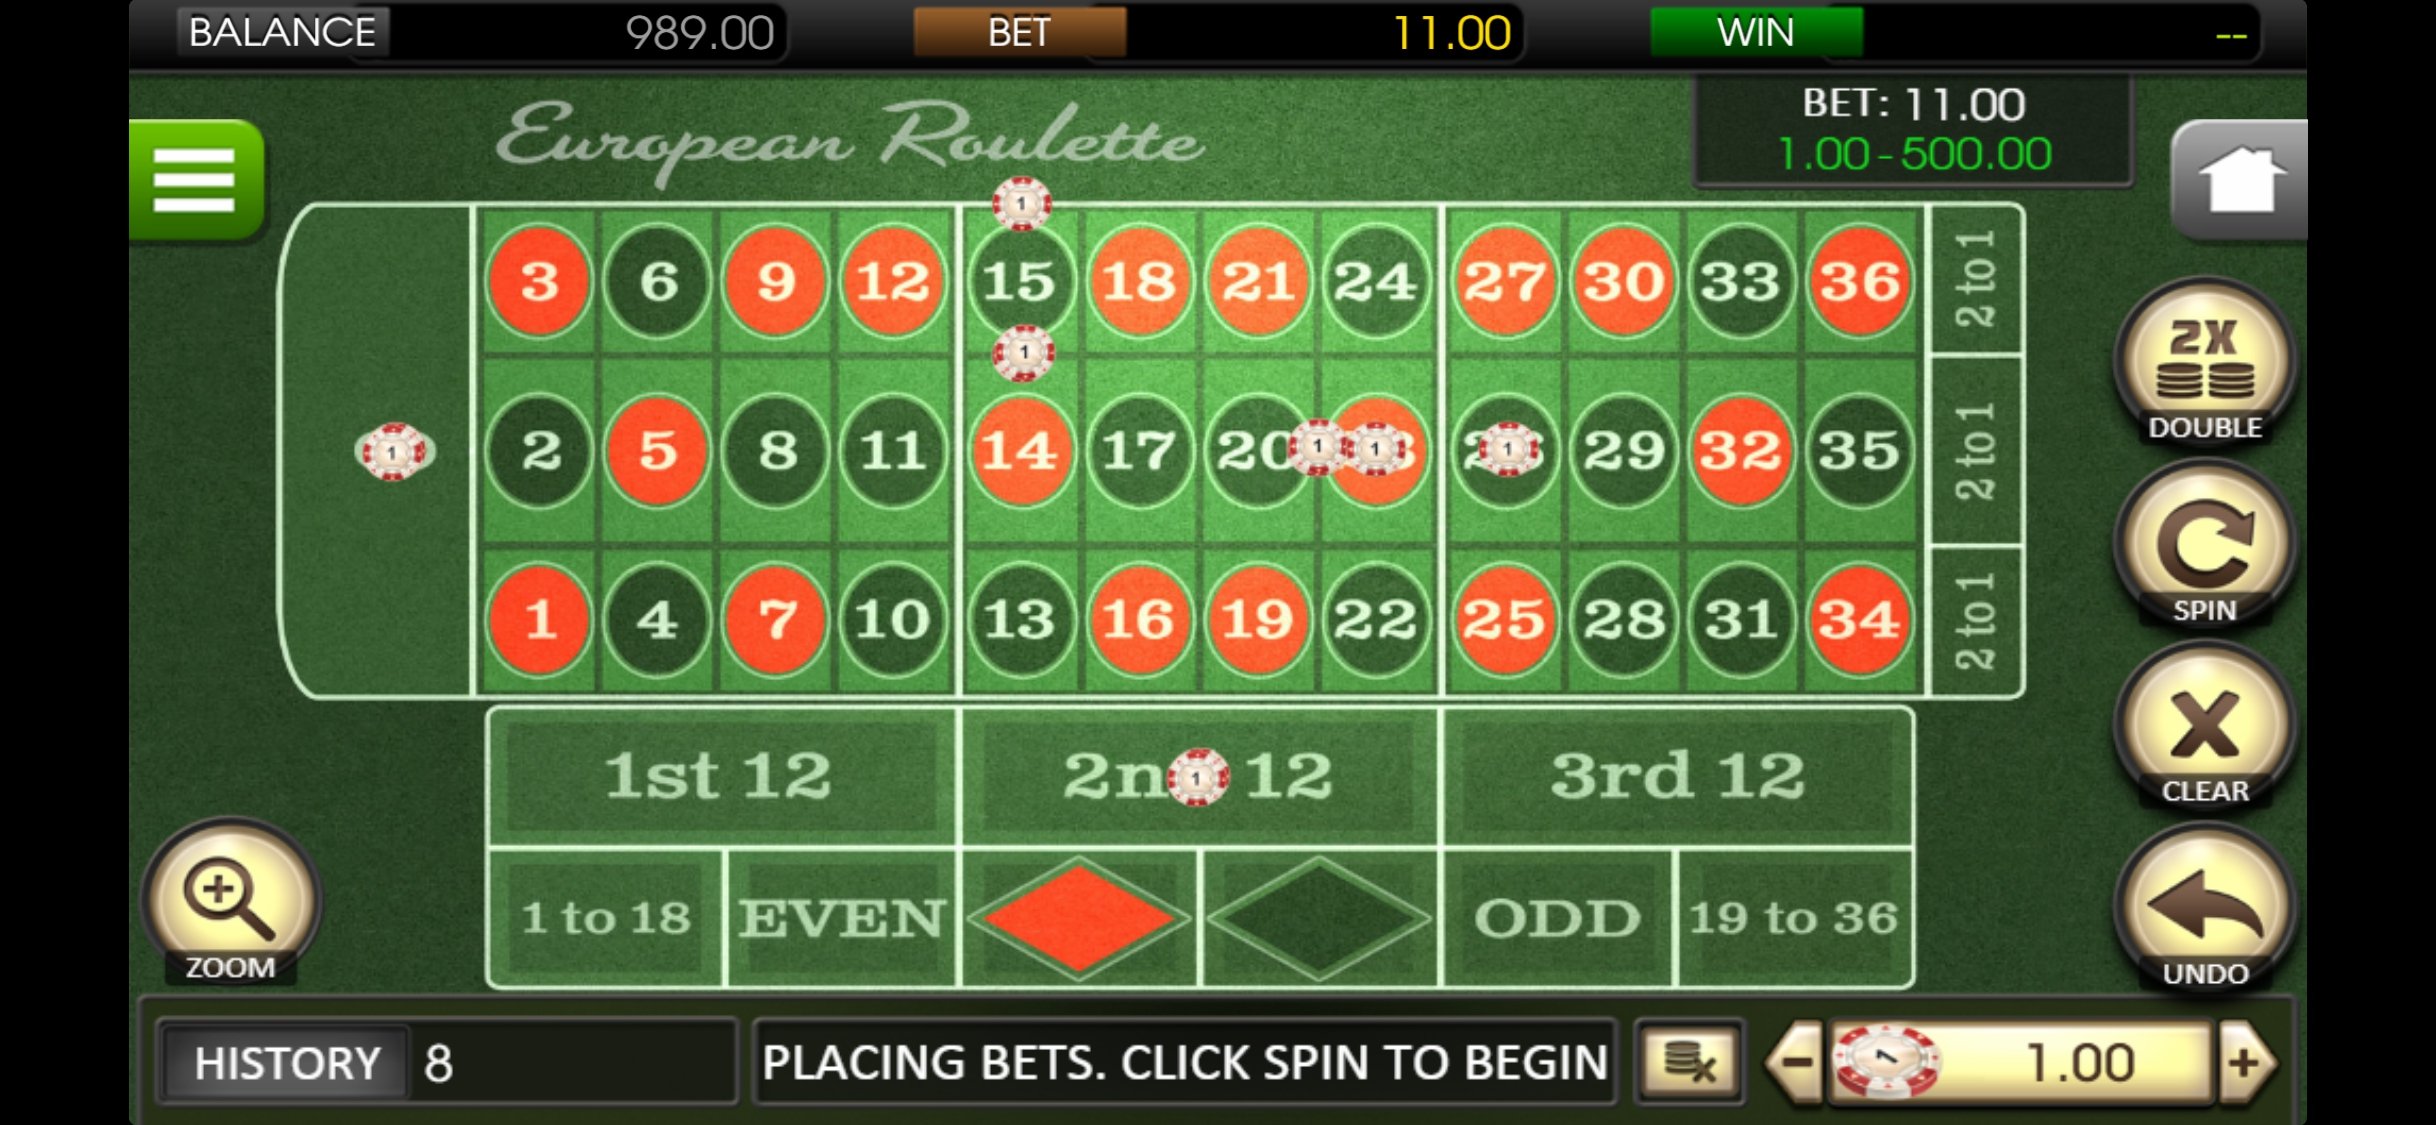 Orient Xpress Casino Mobile Casino Games Review